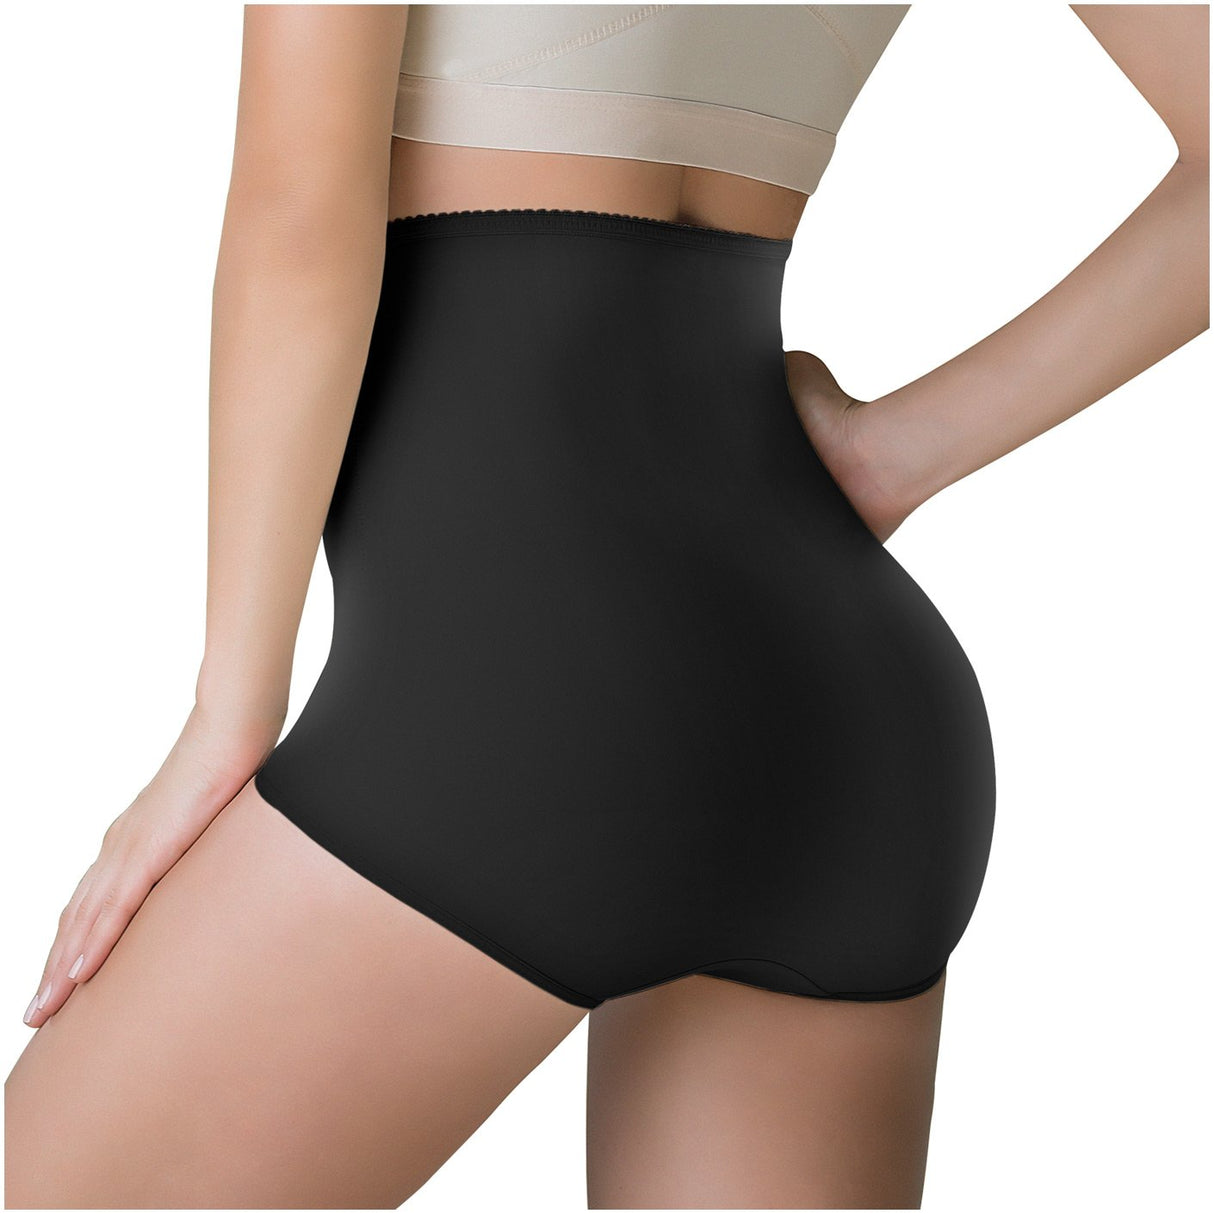 Tummy and waist control panty style girdle | Clearance sale